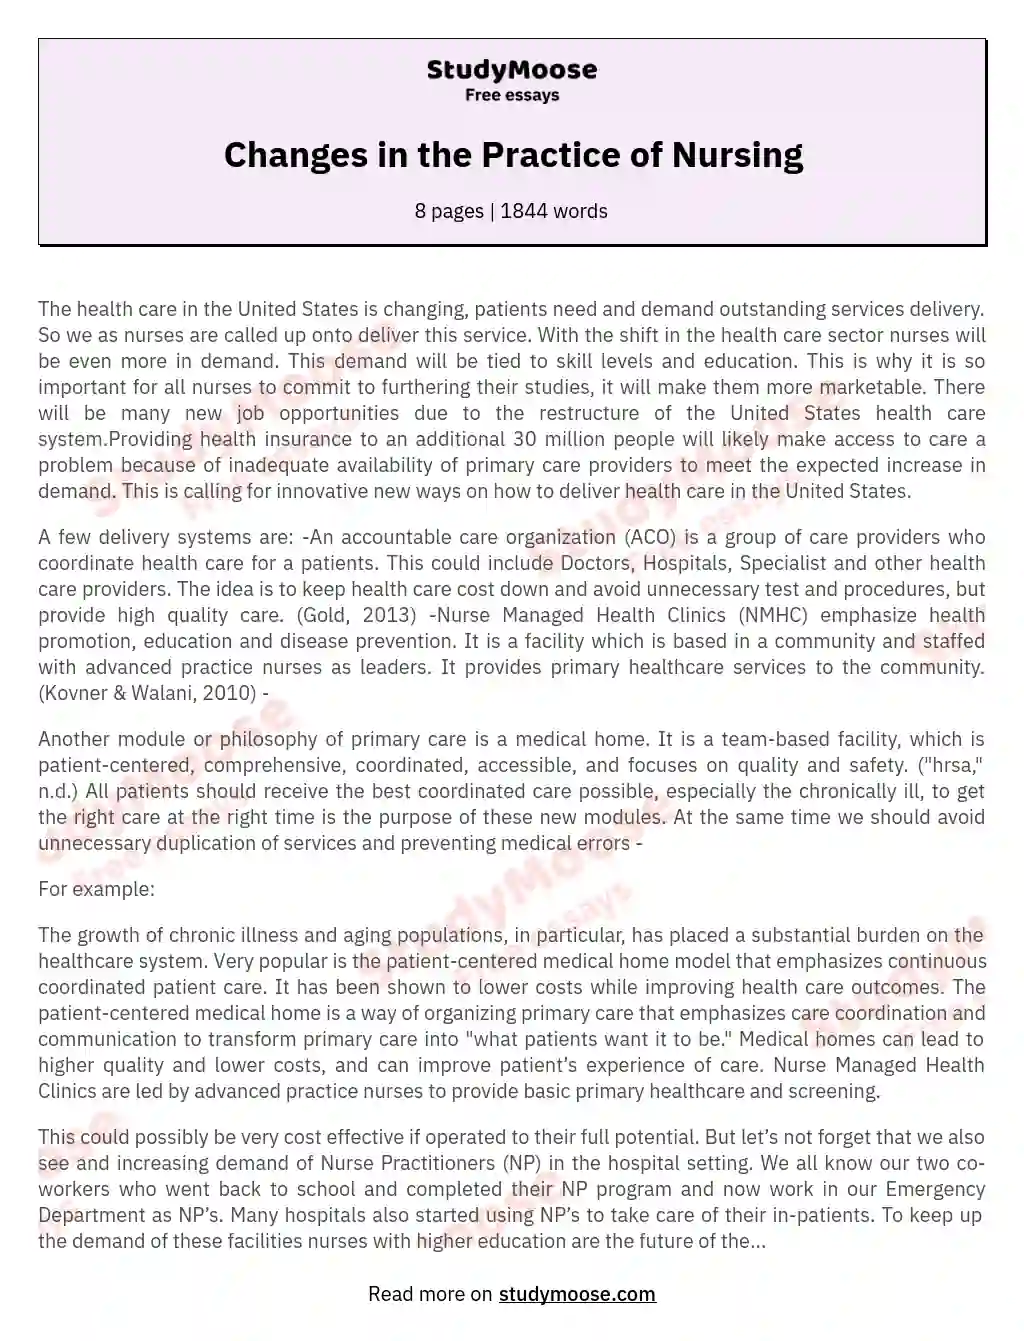 Changes in the Practice of Nursing essay